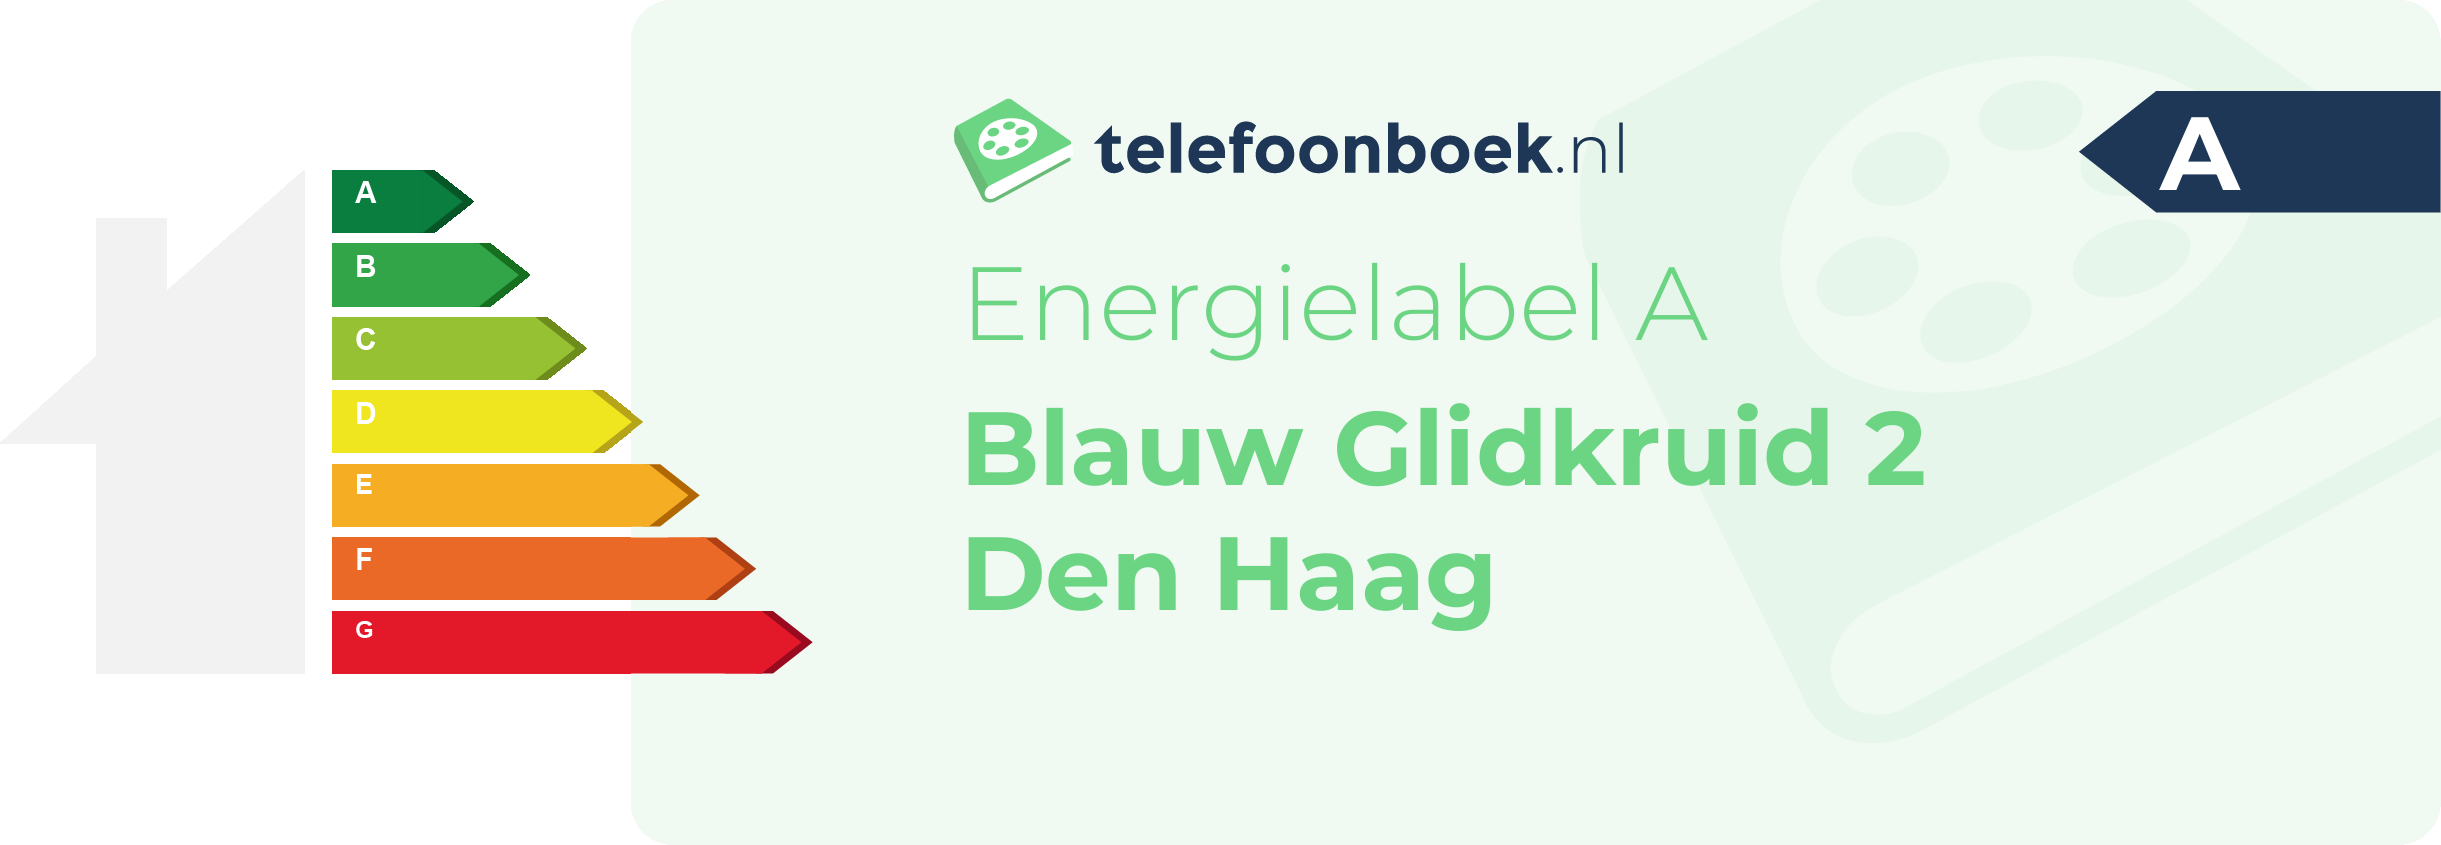 Energielabel Blauw Glidkruid 2 Den Haag